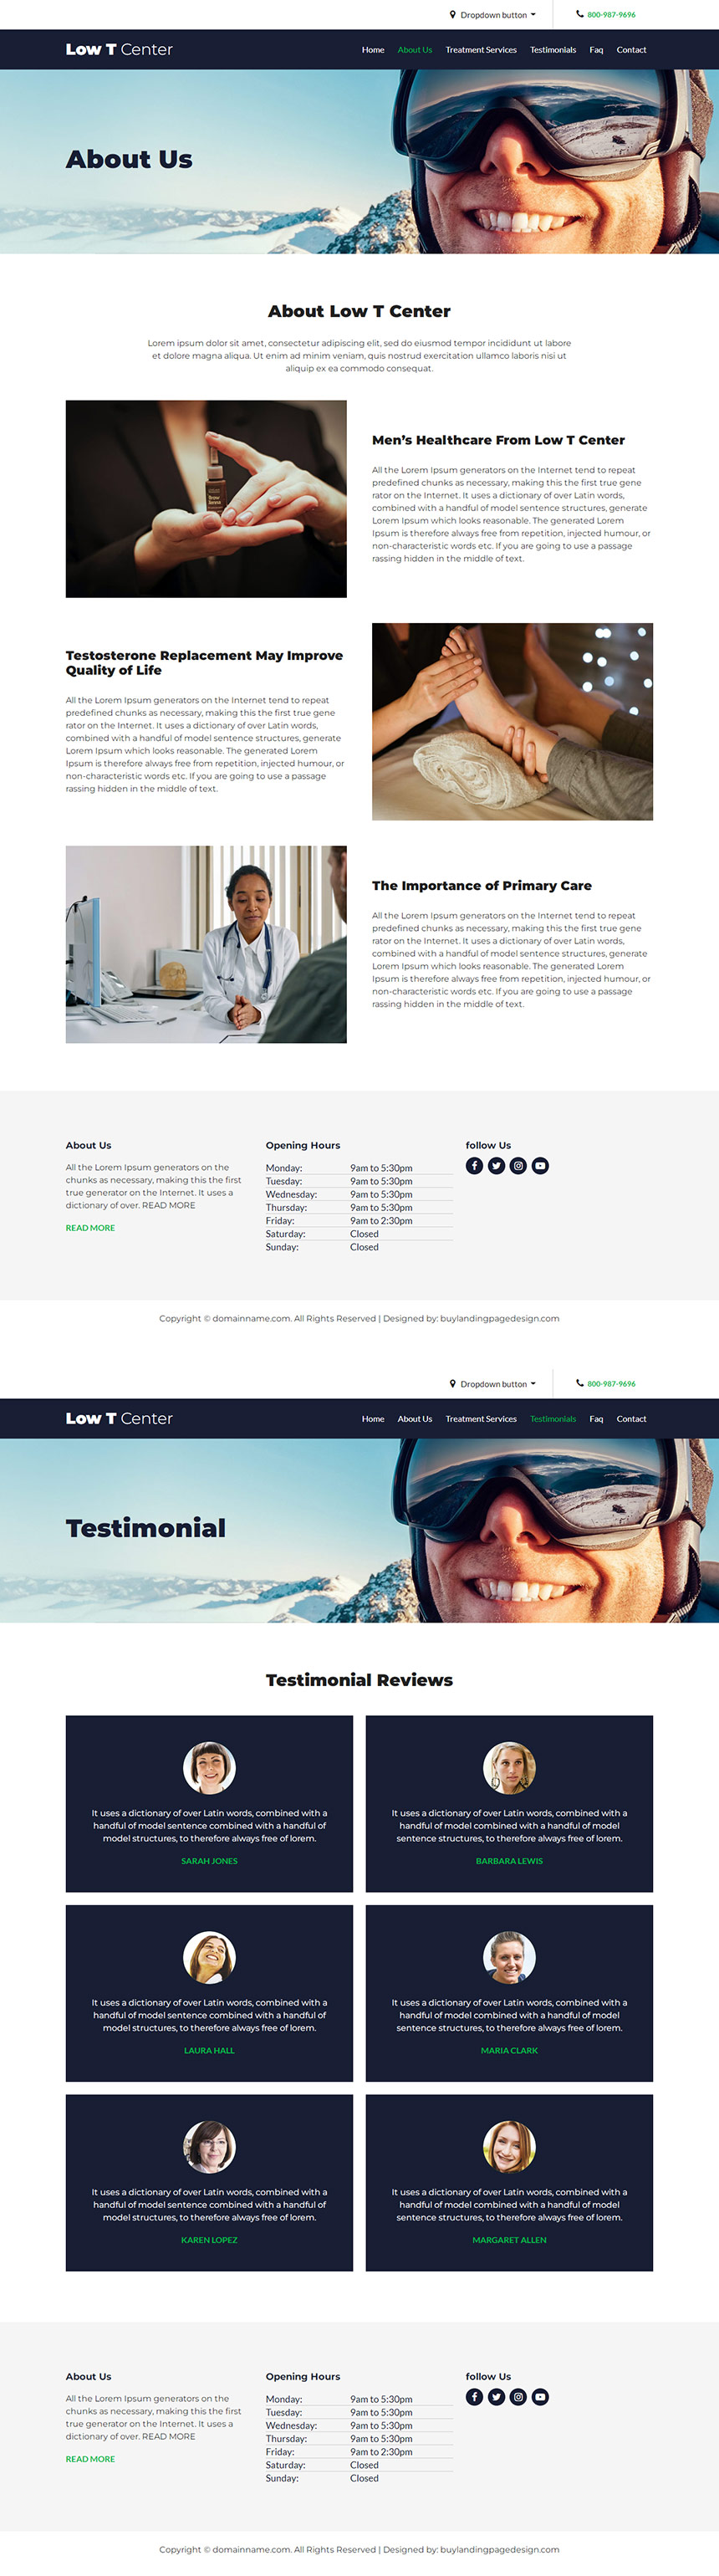 low testosterone treatment responsive website design